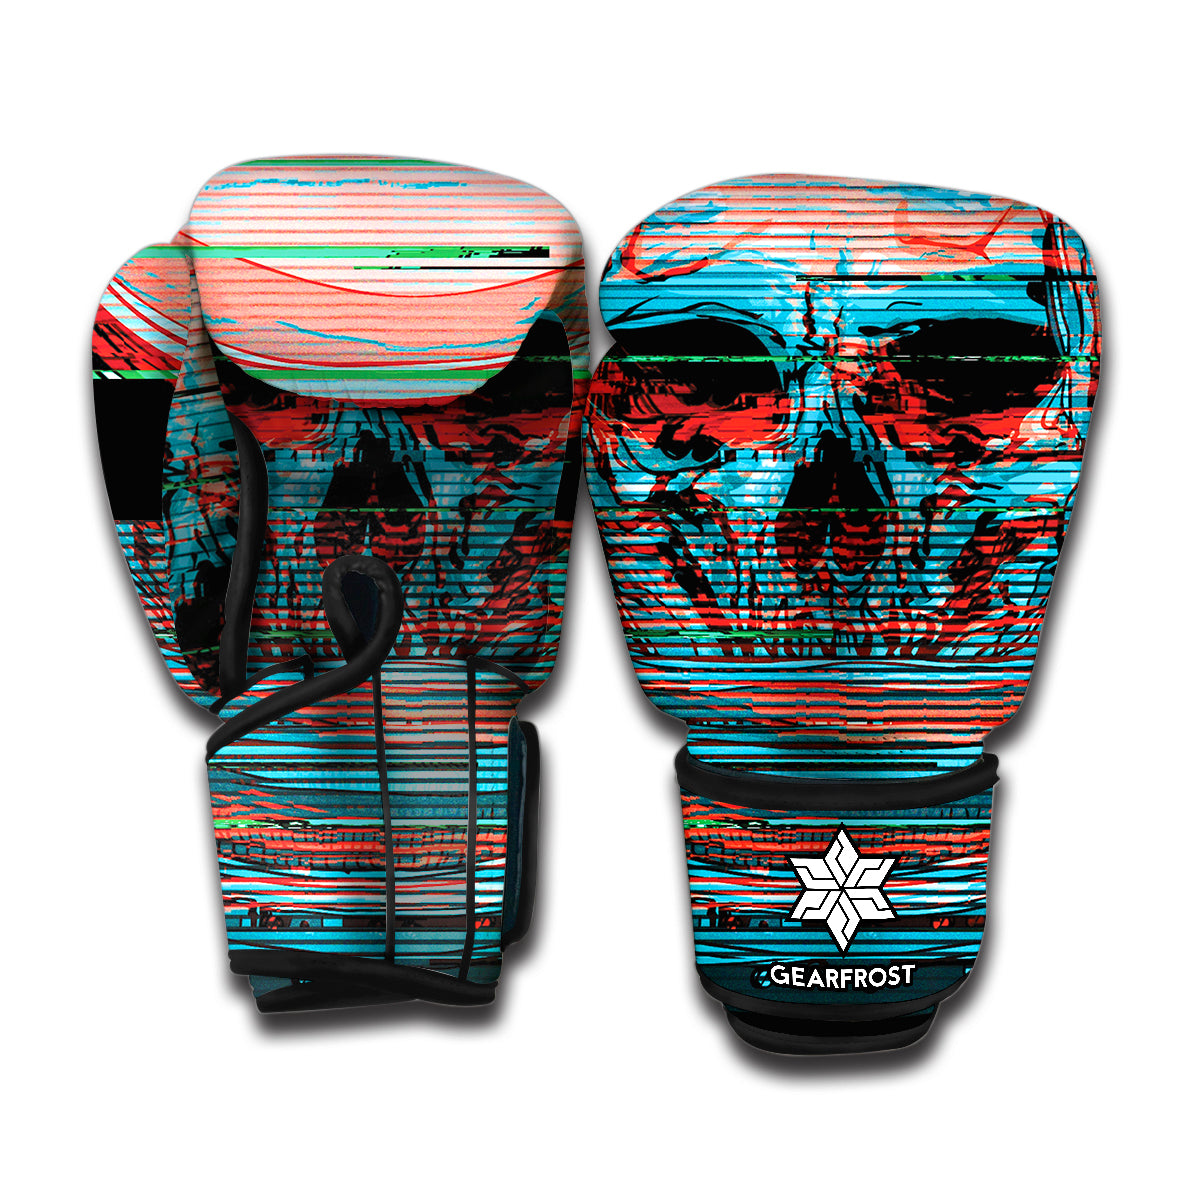 Digital Glitch Astronaut Skull Print Boxing Gloves